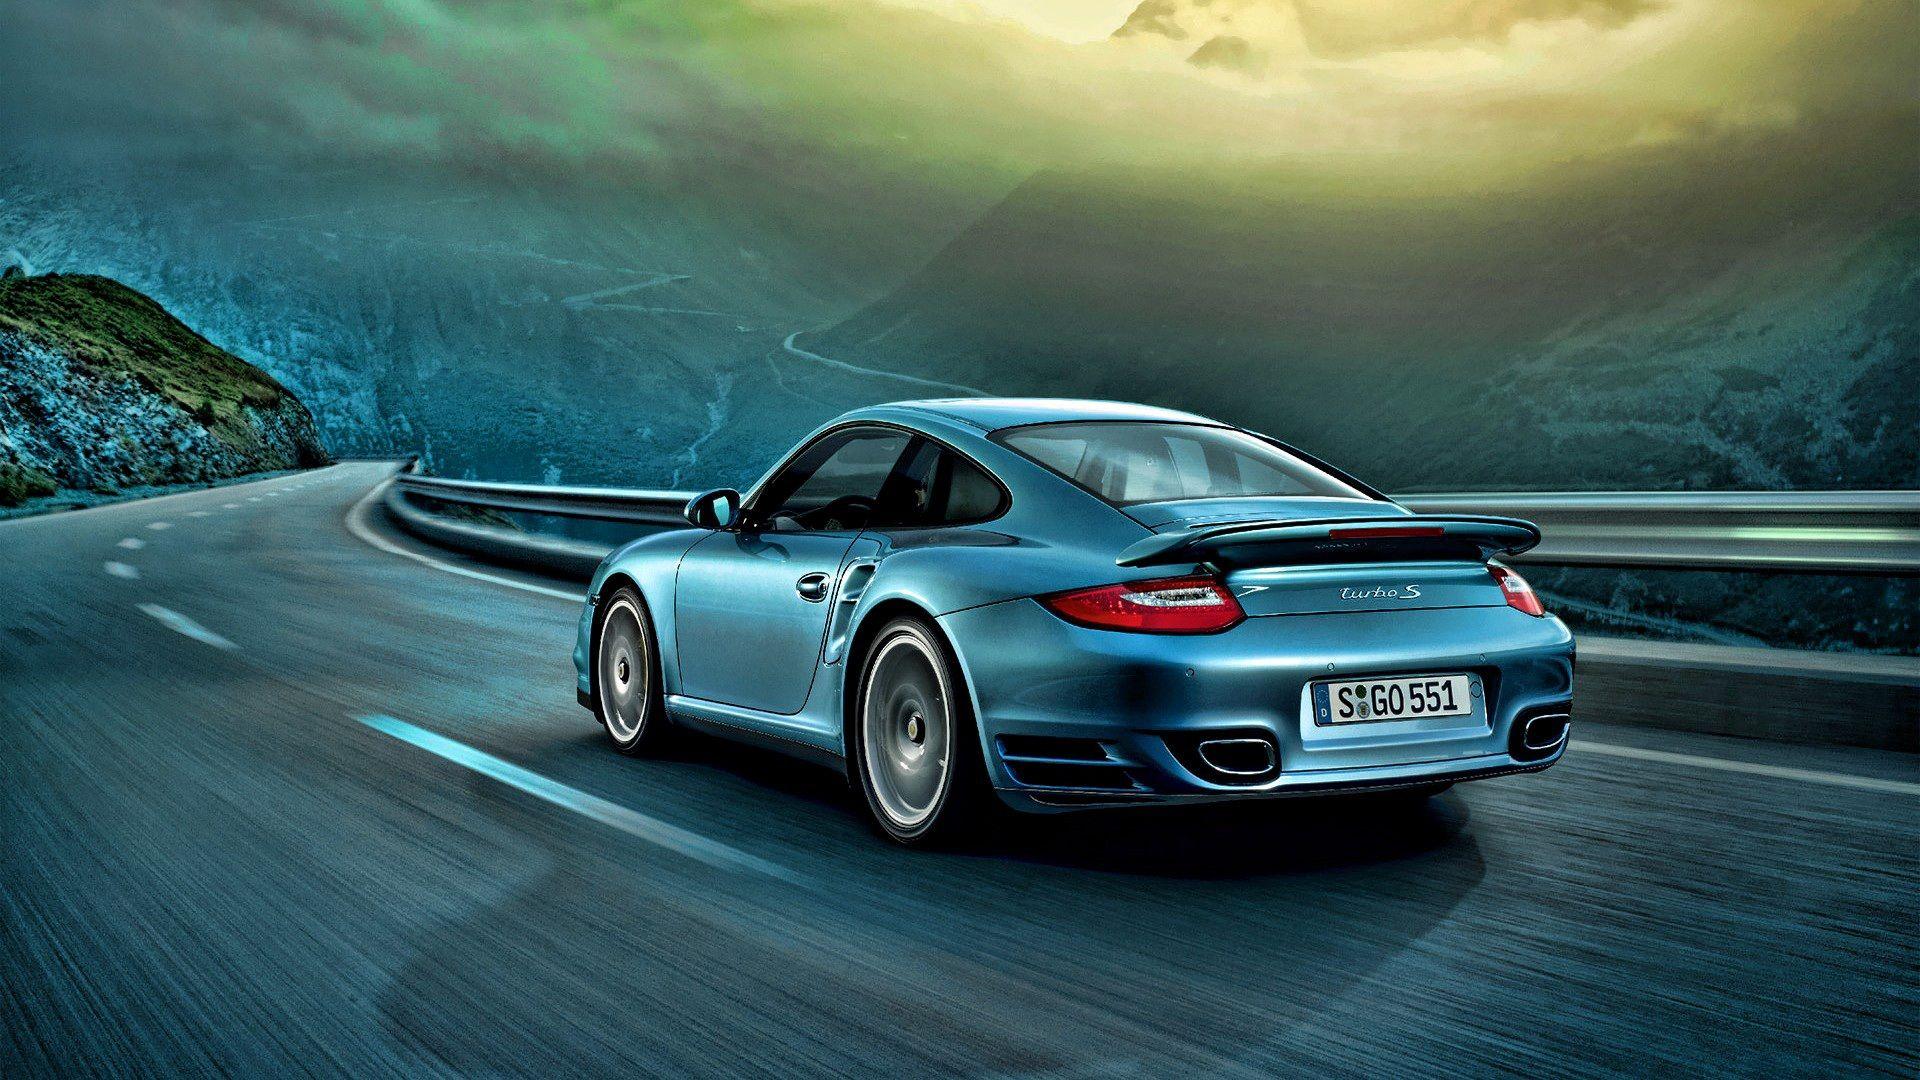 Porsche 911 Turbo HD Wallpaper, Backgrounds Image